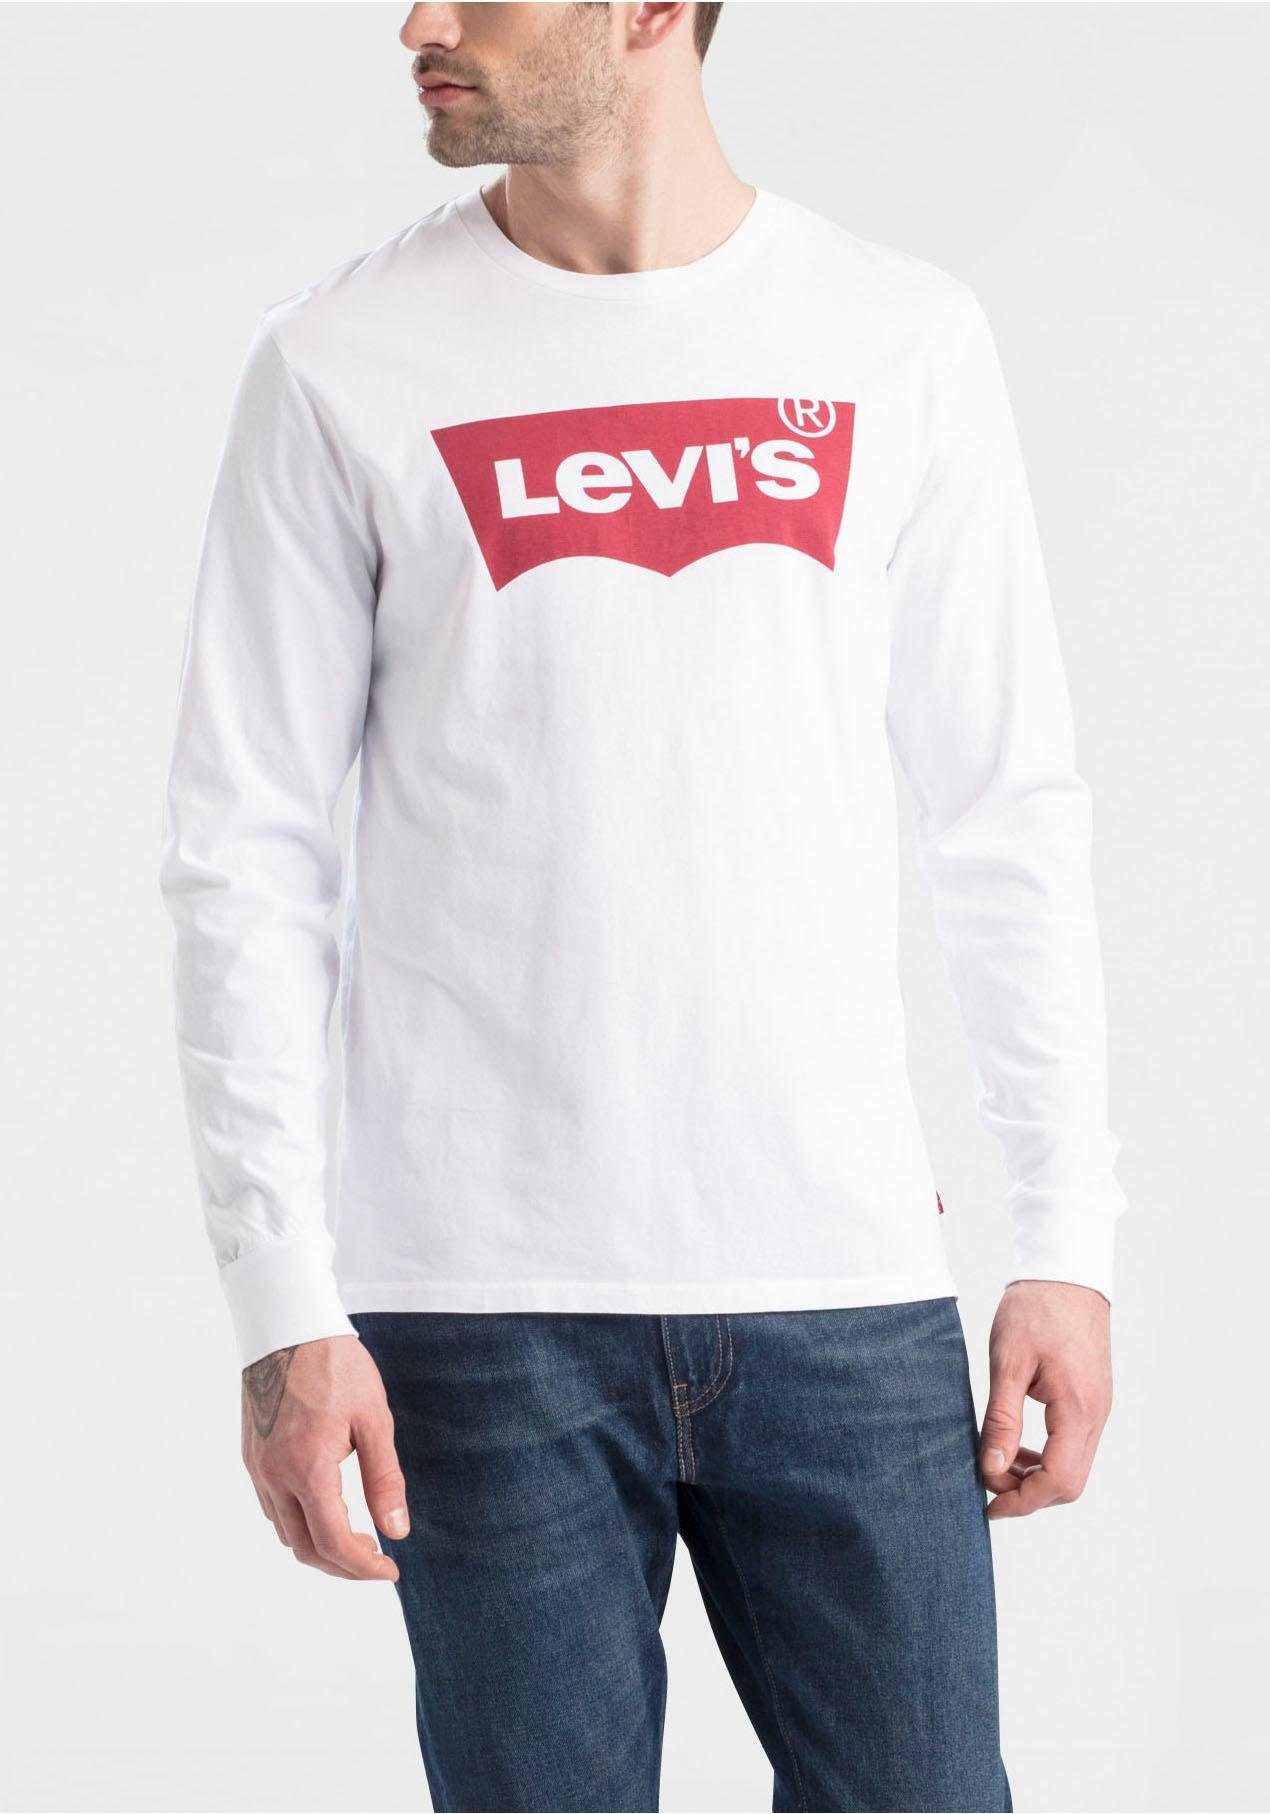 Levi's Herren Langarmshirts » Longsleeves online kaufen | OTTO